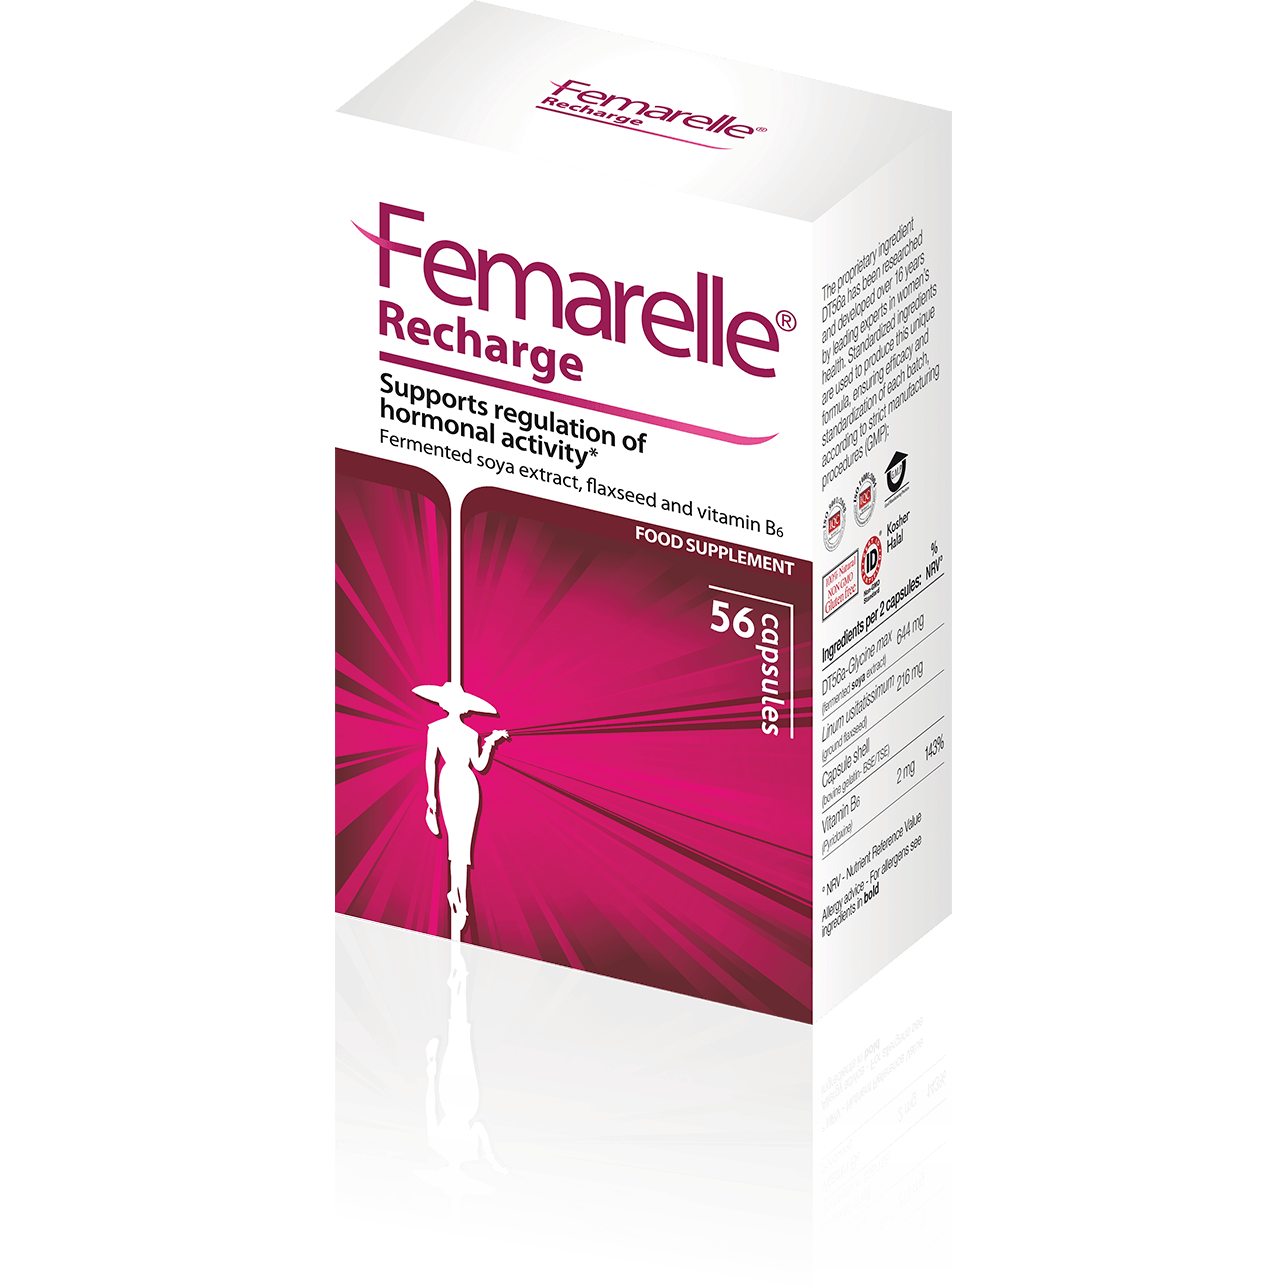 Femarelle® Recharge